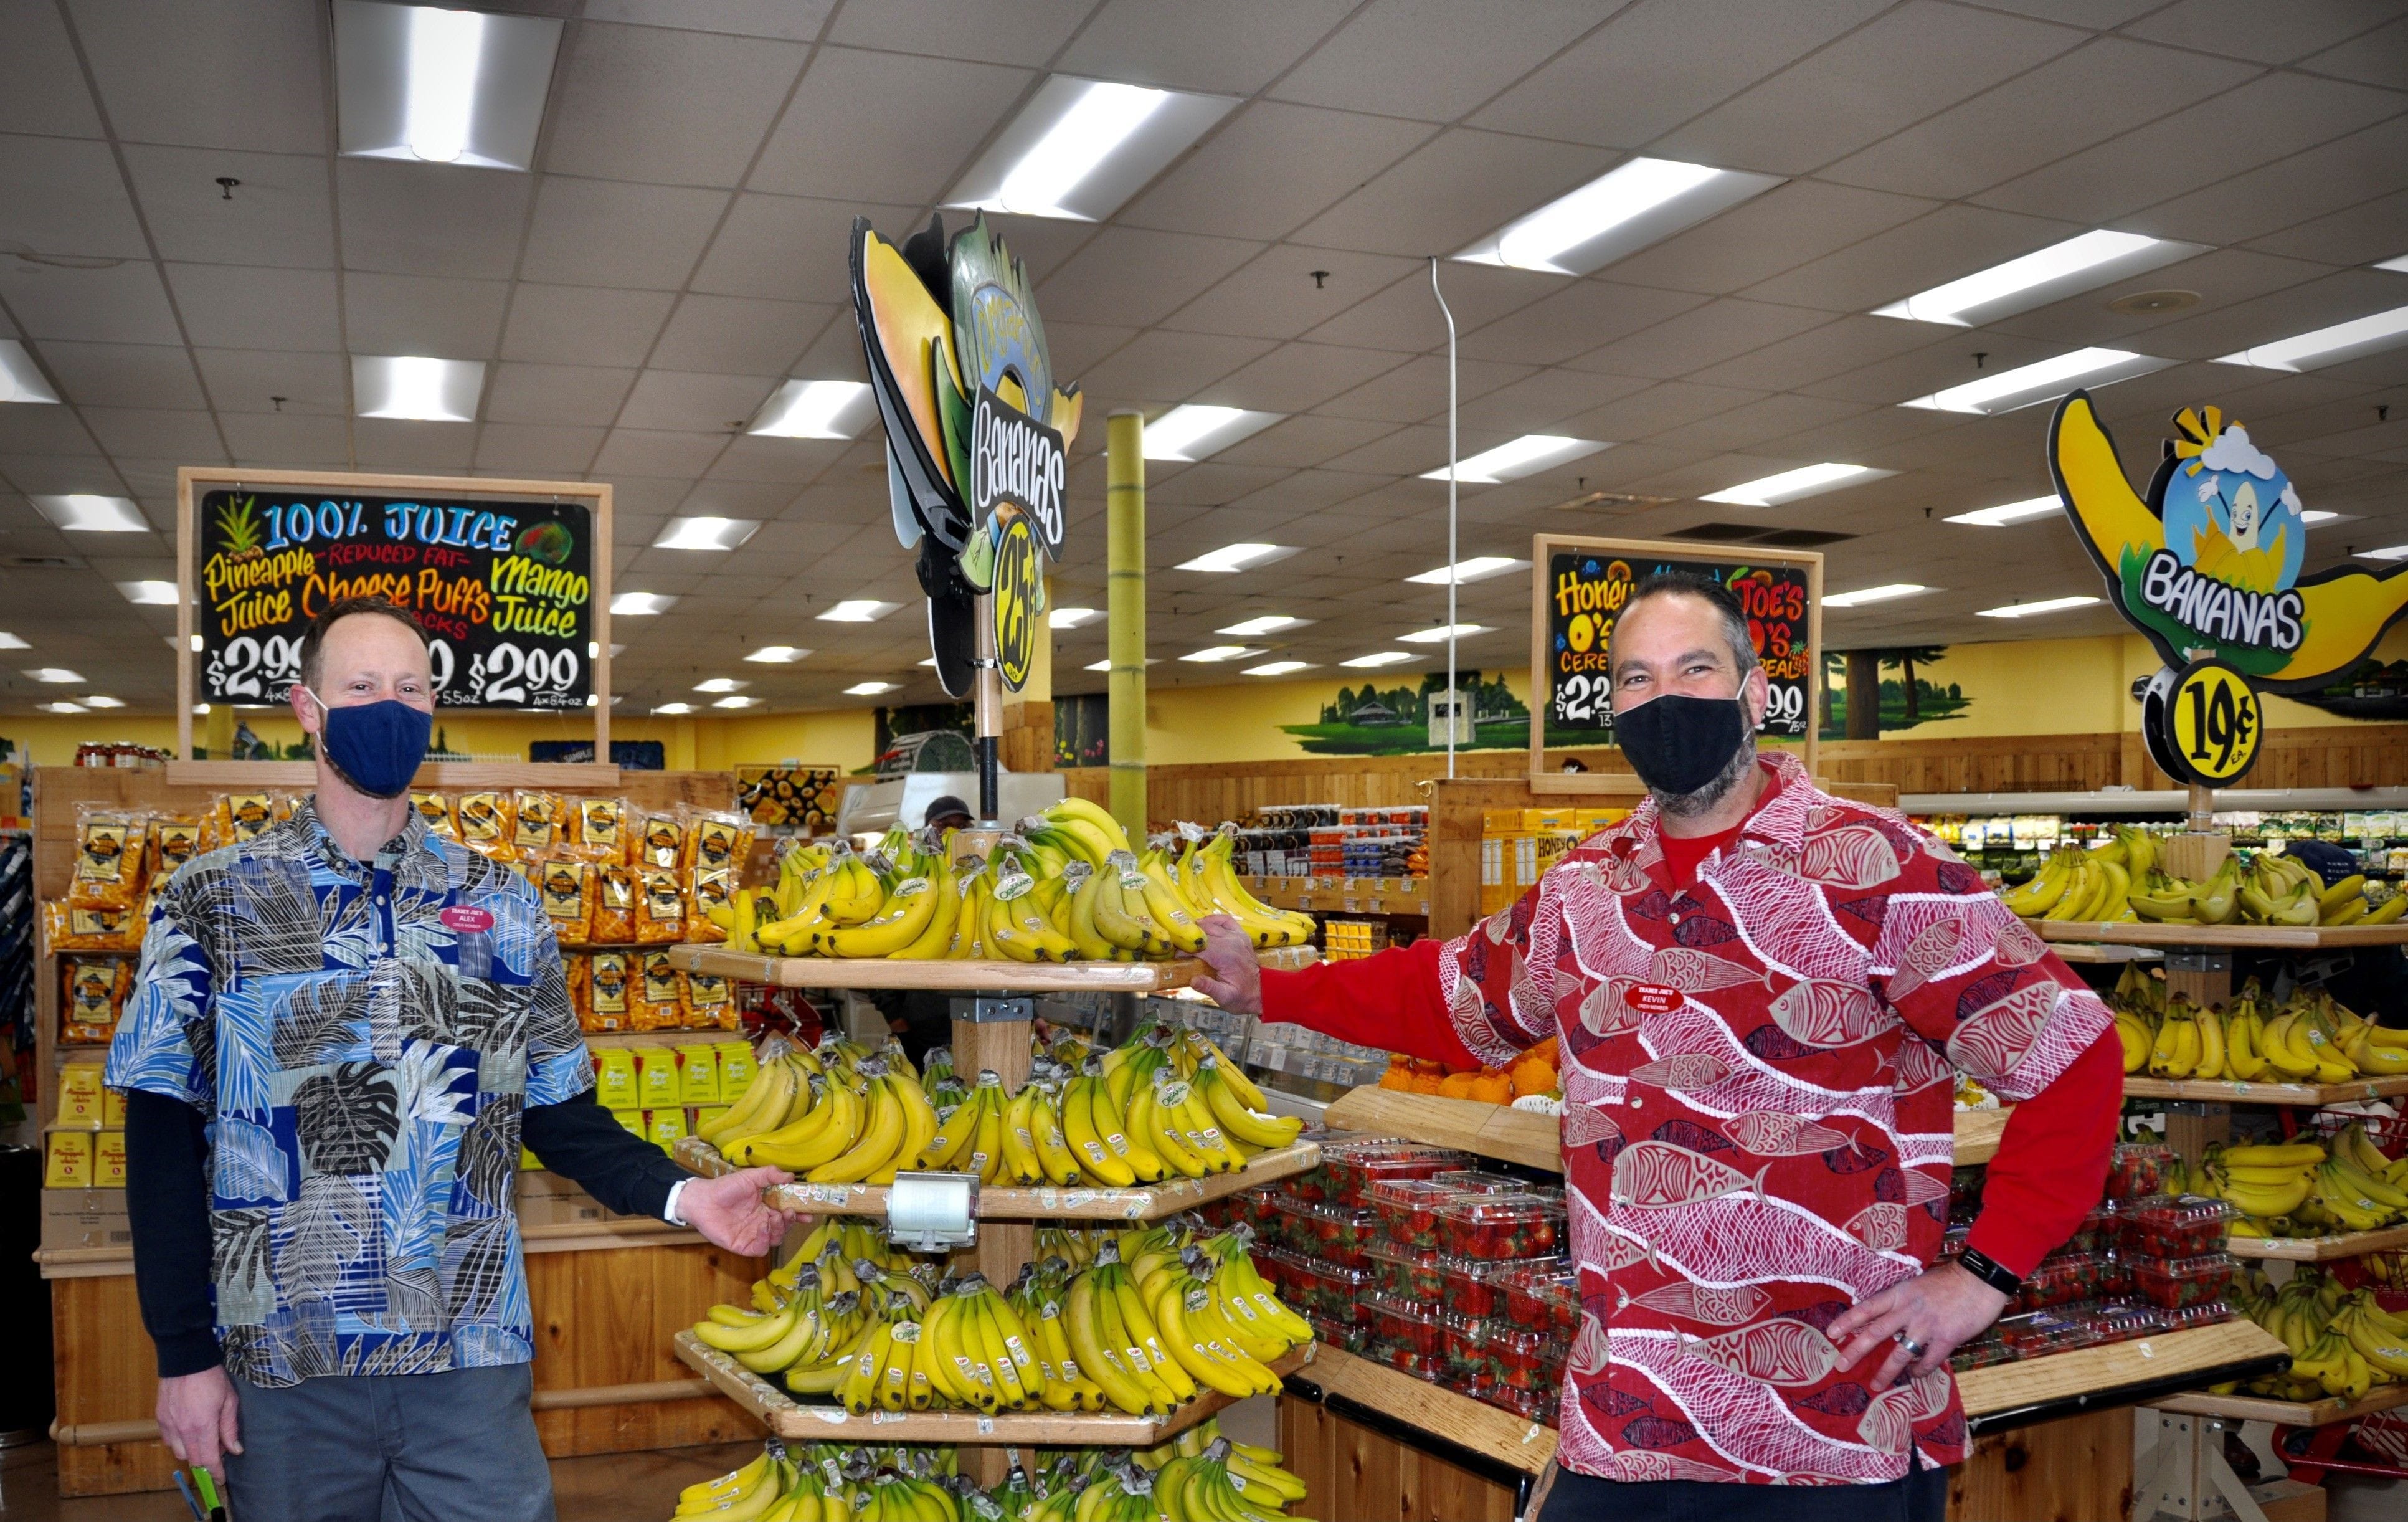 Trader Joe's Crew Members standing by the banana display.